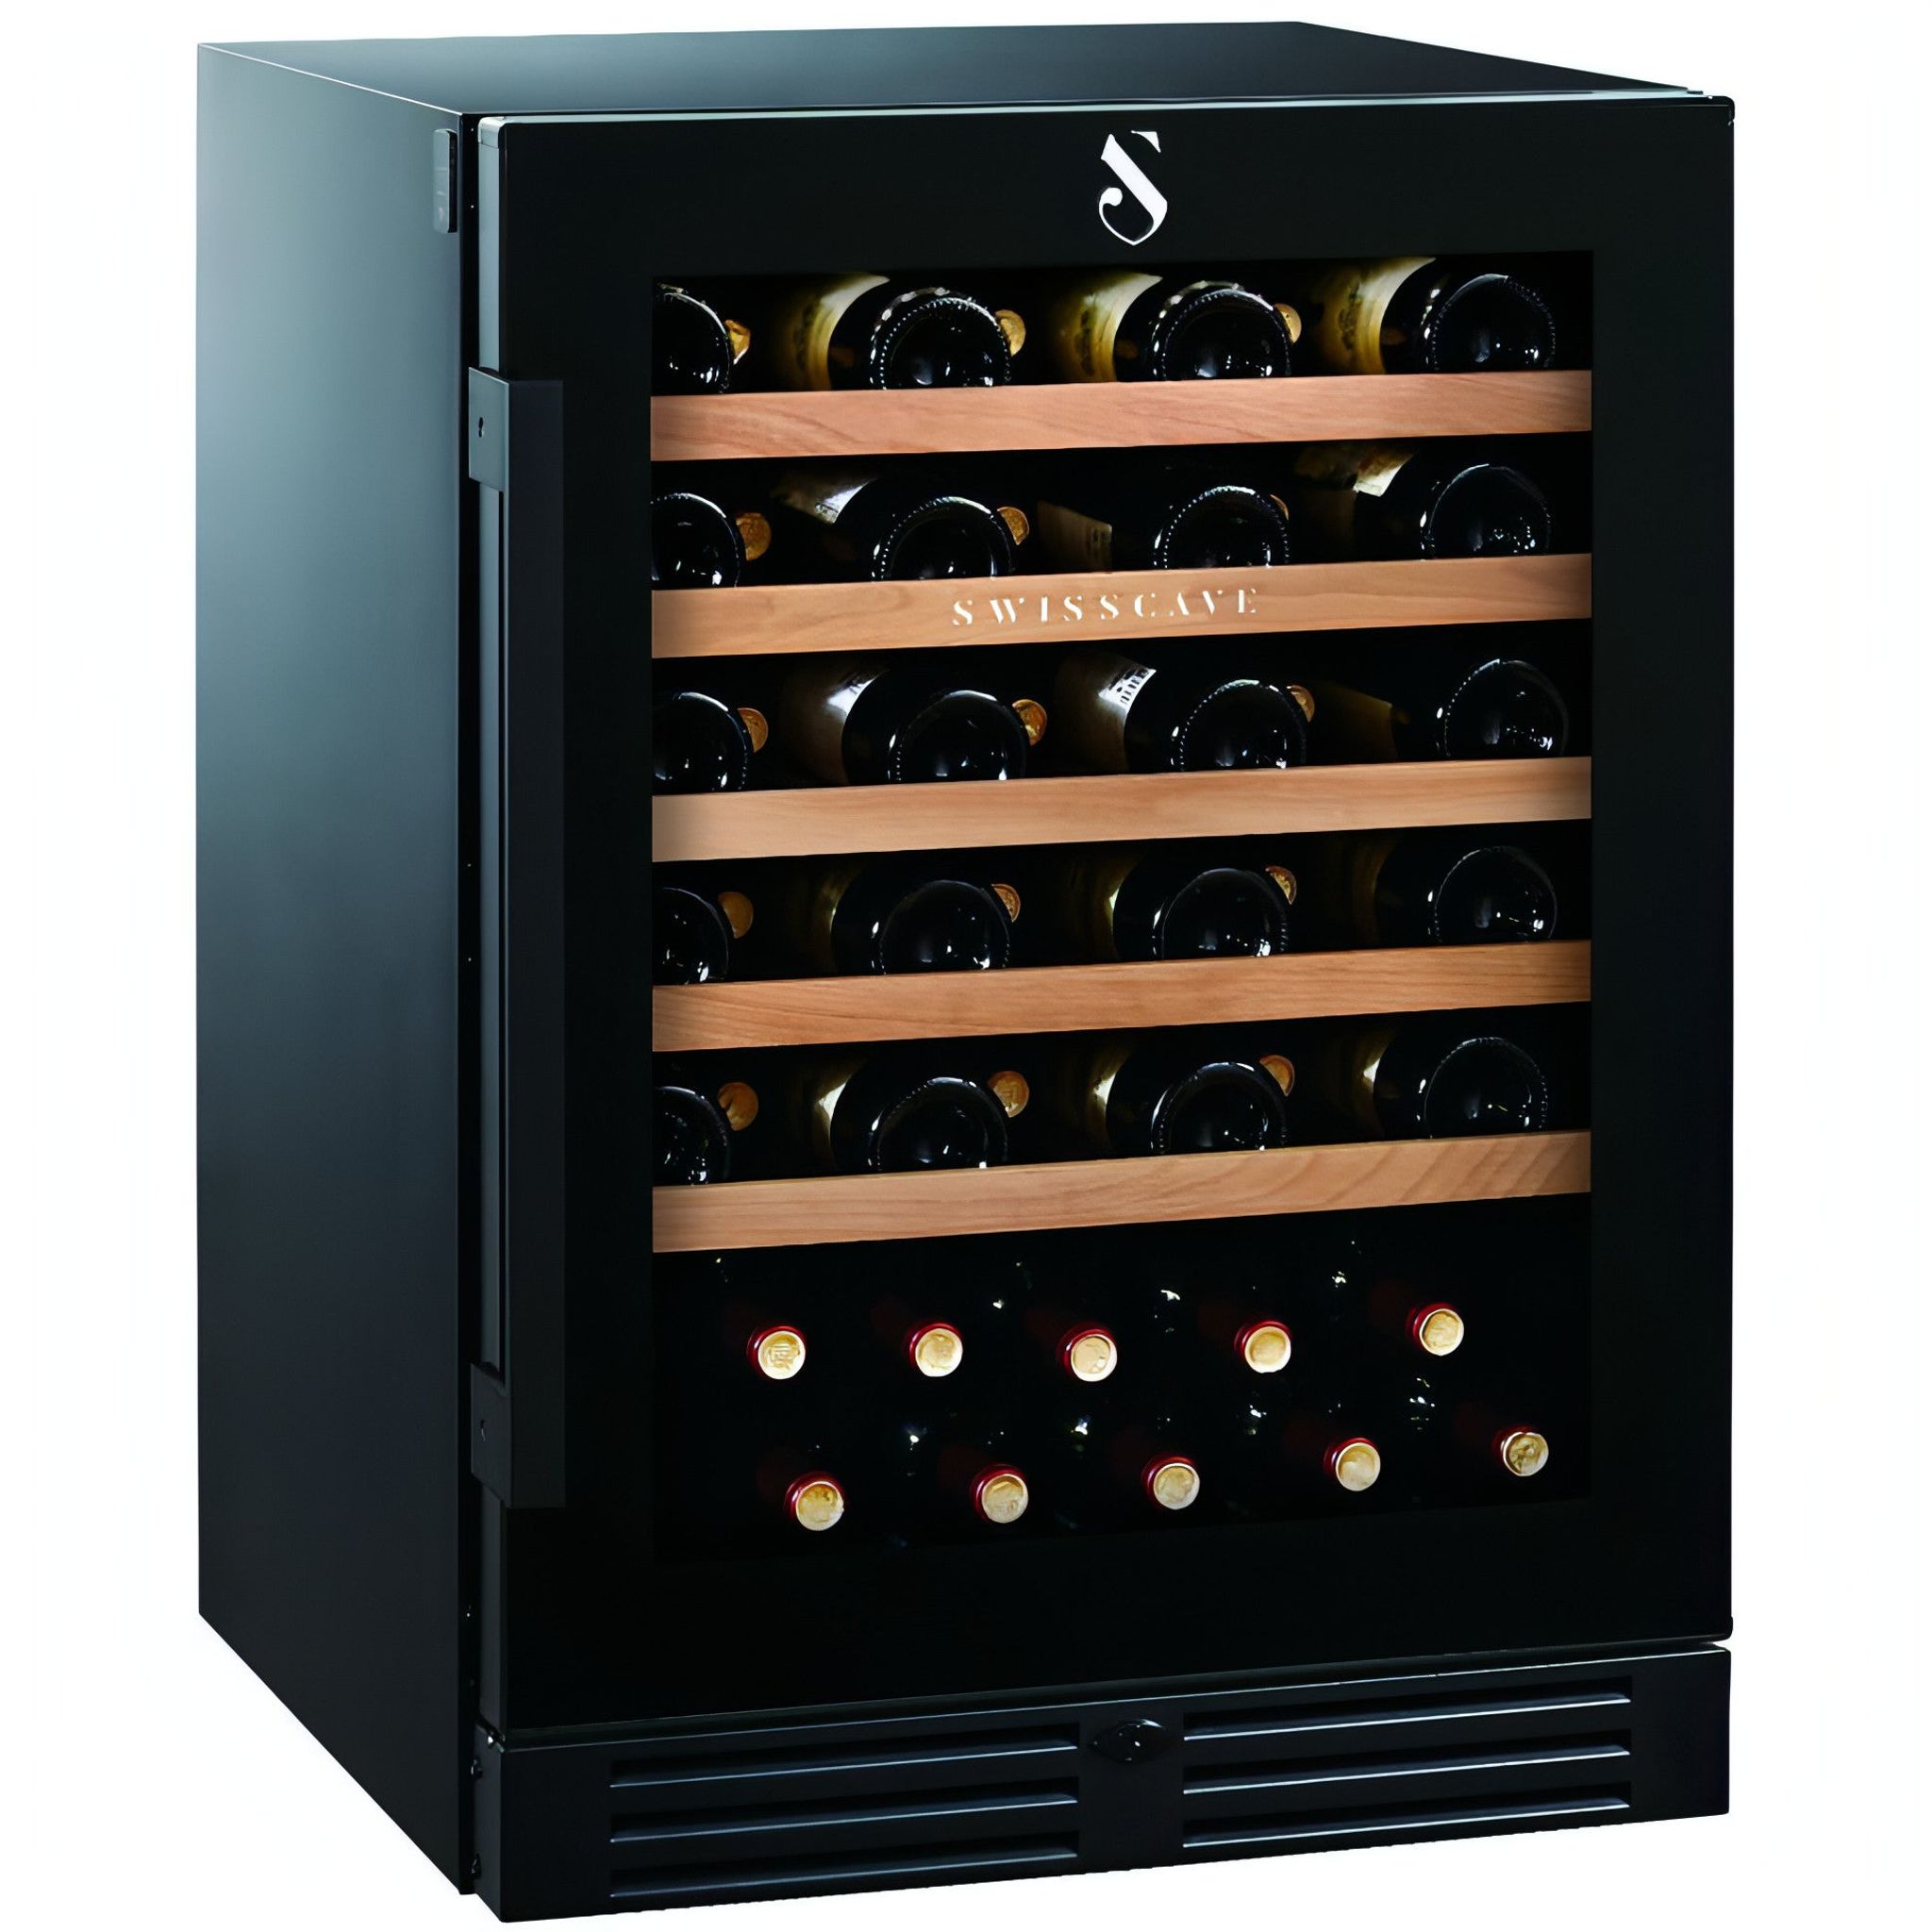 SWISSCAVE Premium - 600mm - 47 Bottle Wine Cooler - WLB-160F